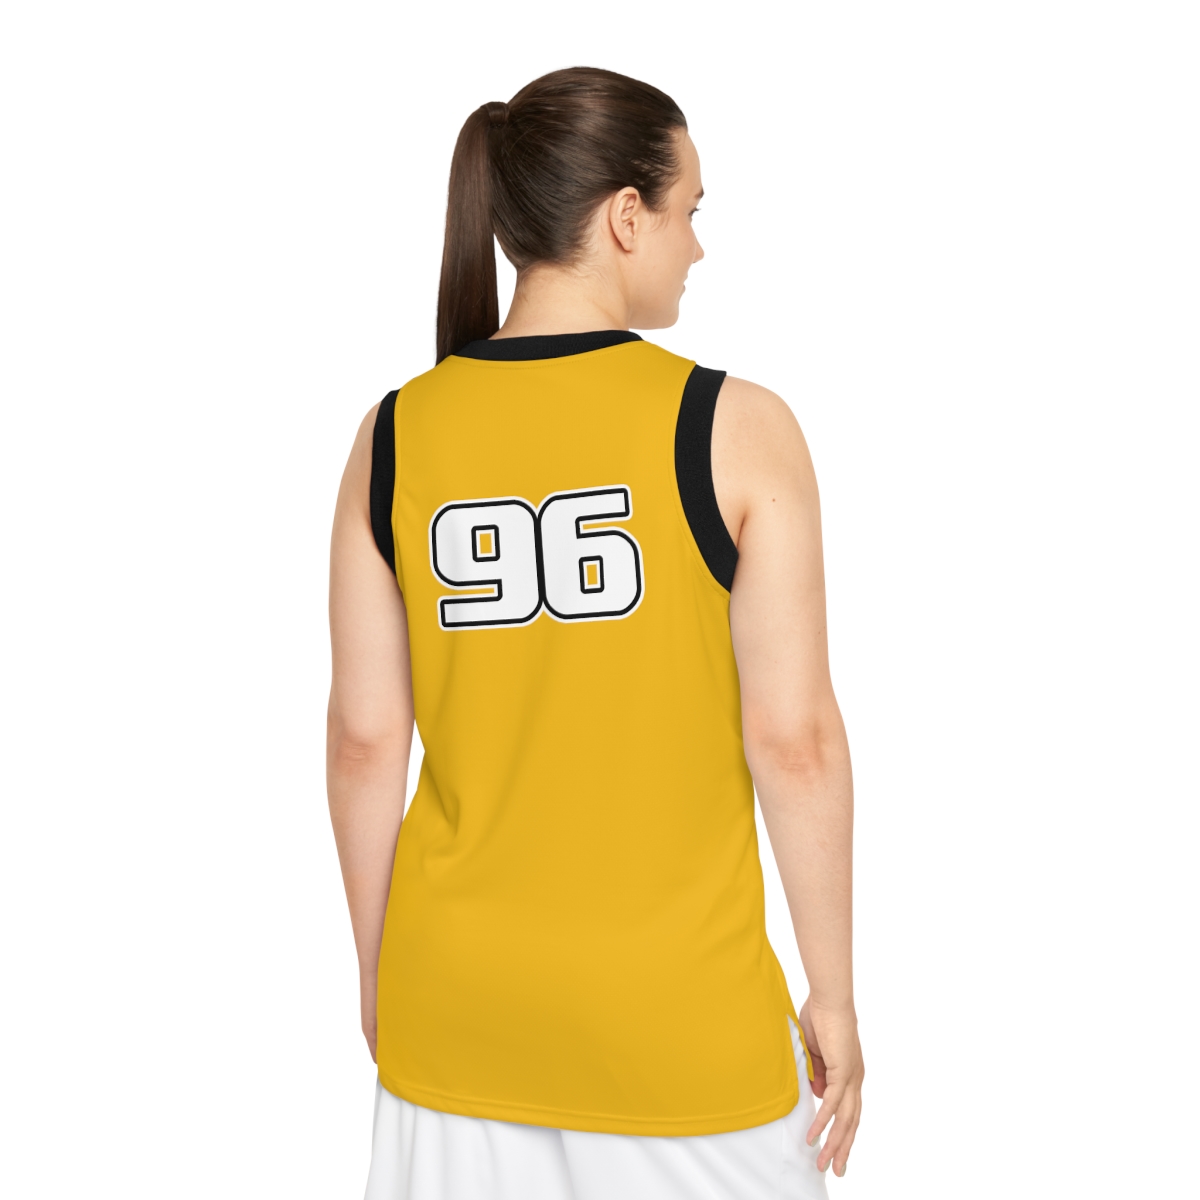 Unisex Basketball Jersey - RWS (US) product thumbnail image